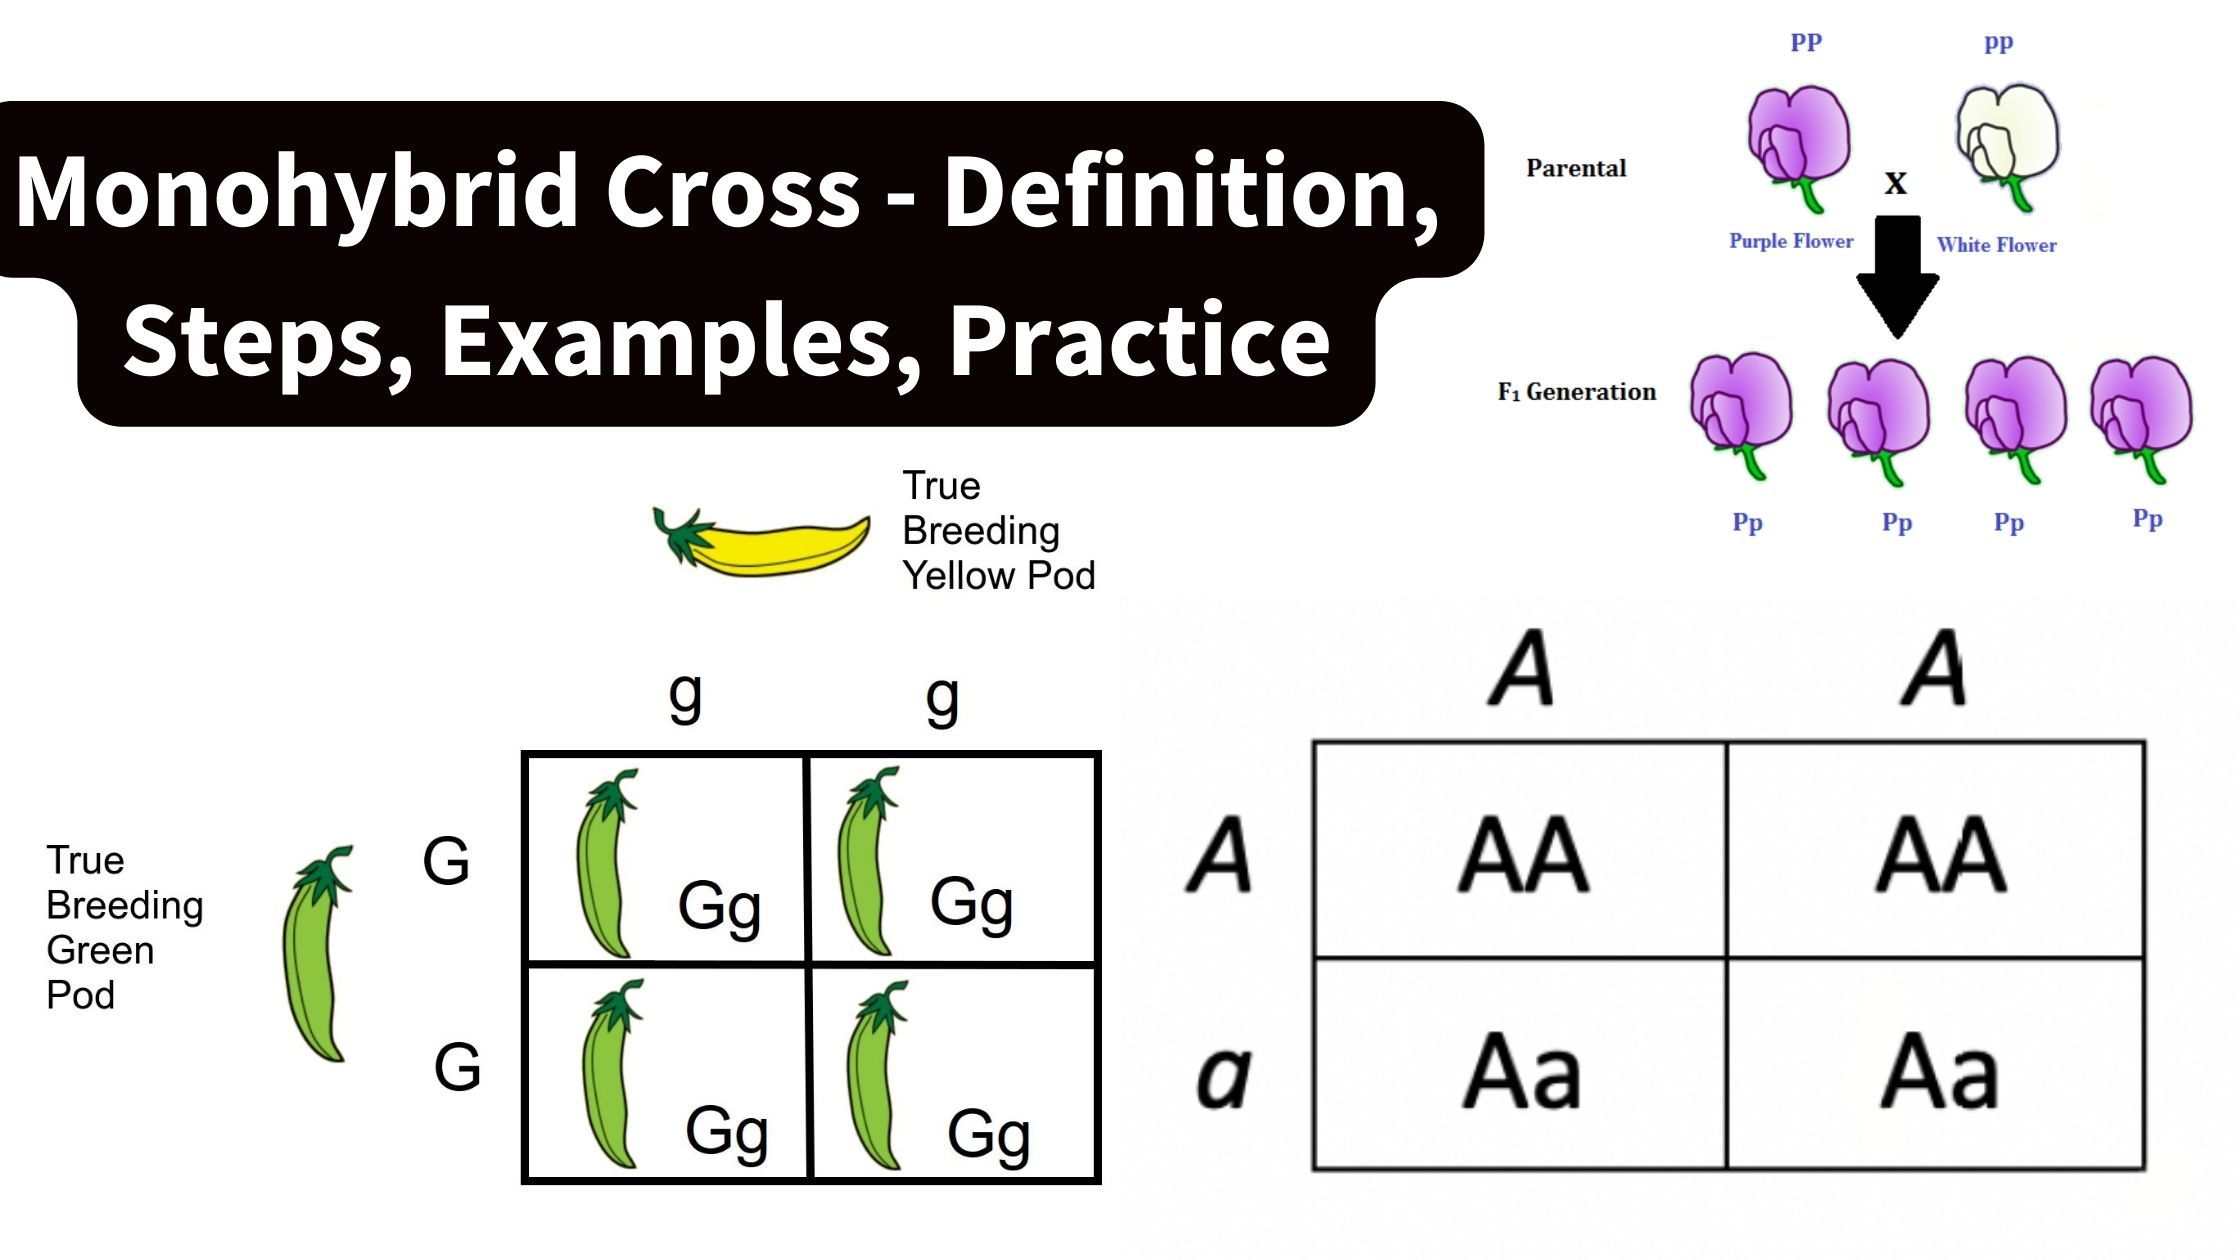 Monohybrid Cross - Definition, Steps, Examples, Practice